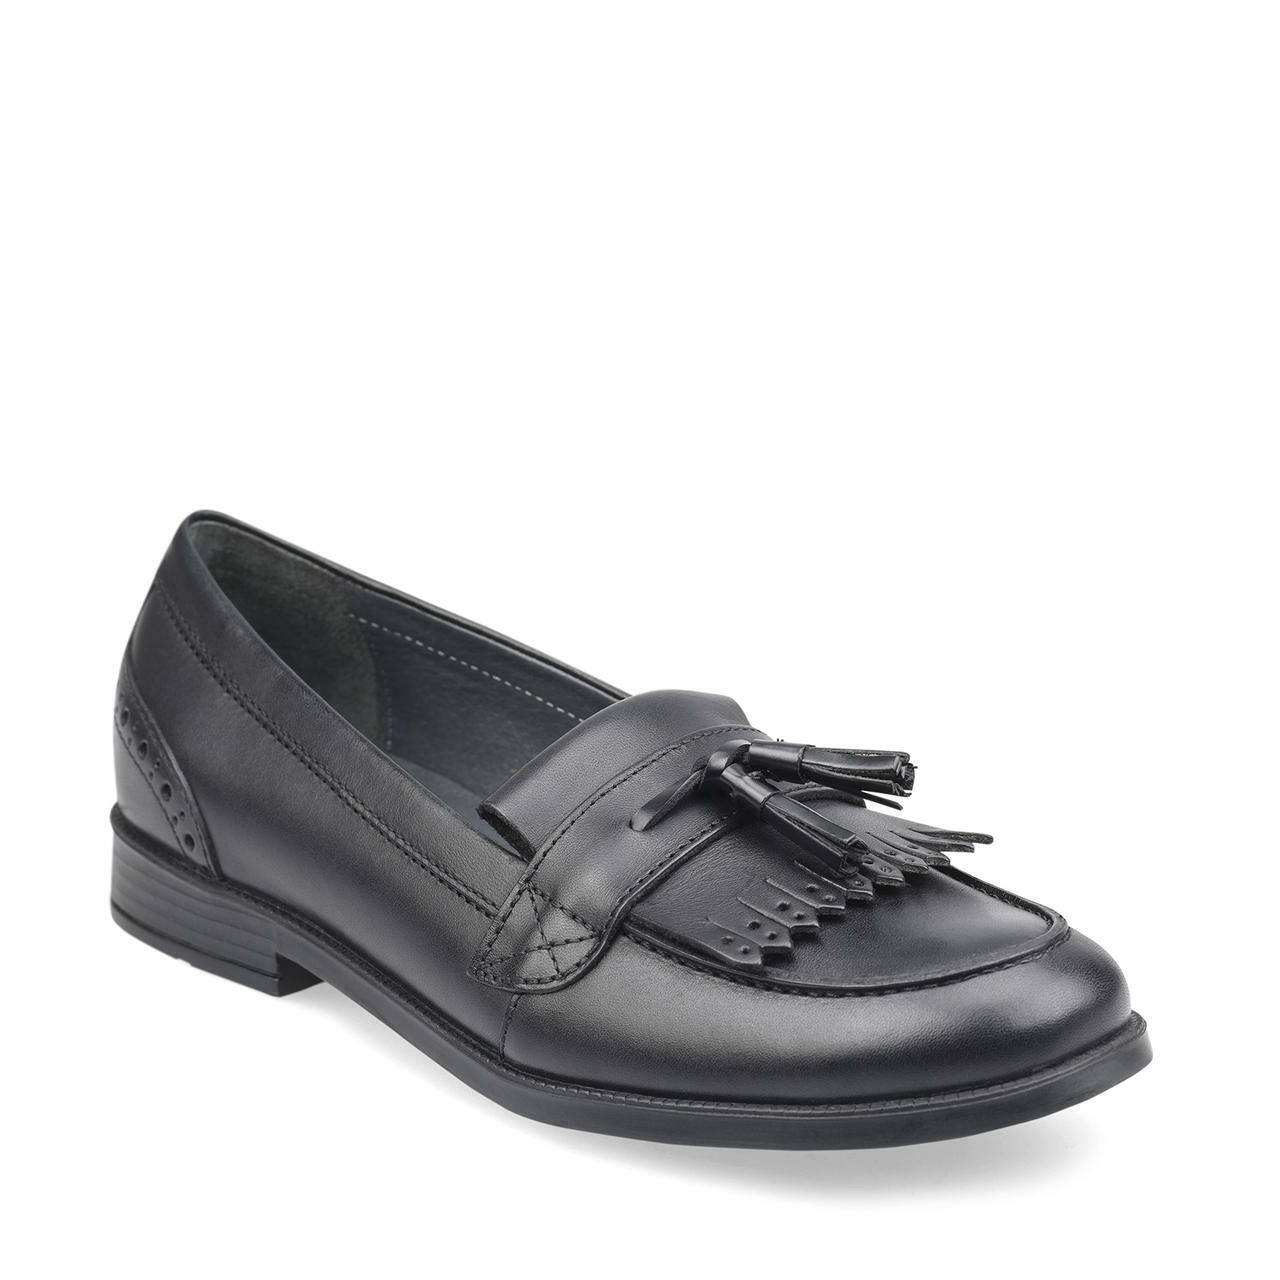 StartRite SKETCH Leather School Shoes (Black) 